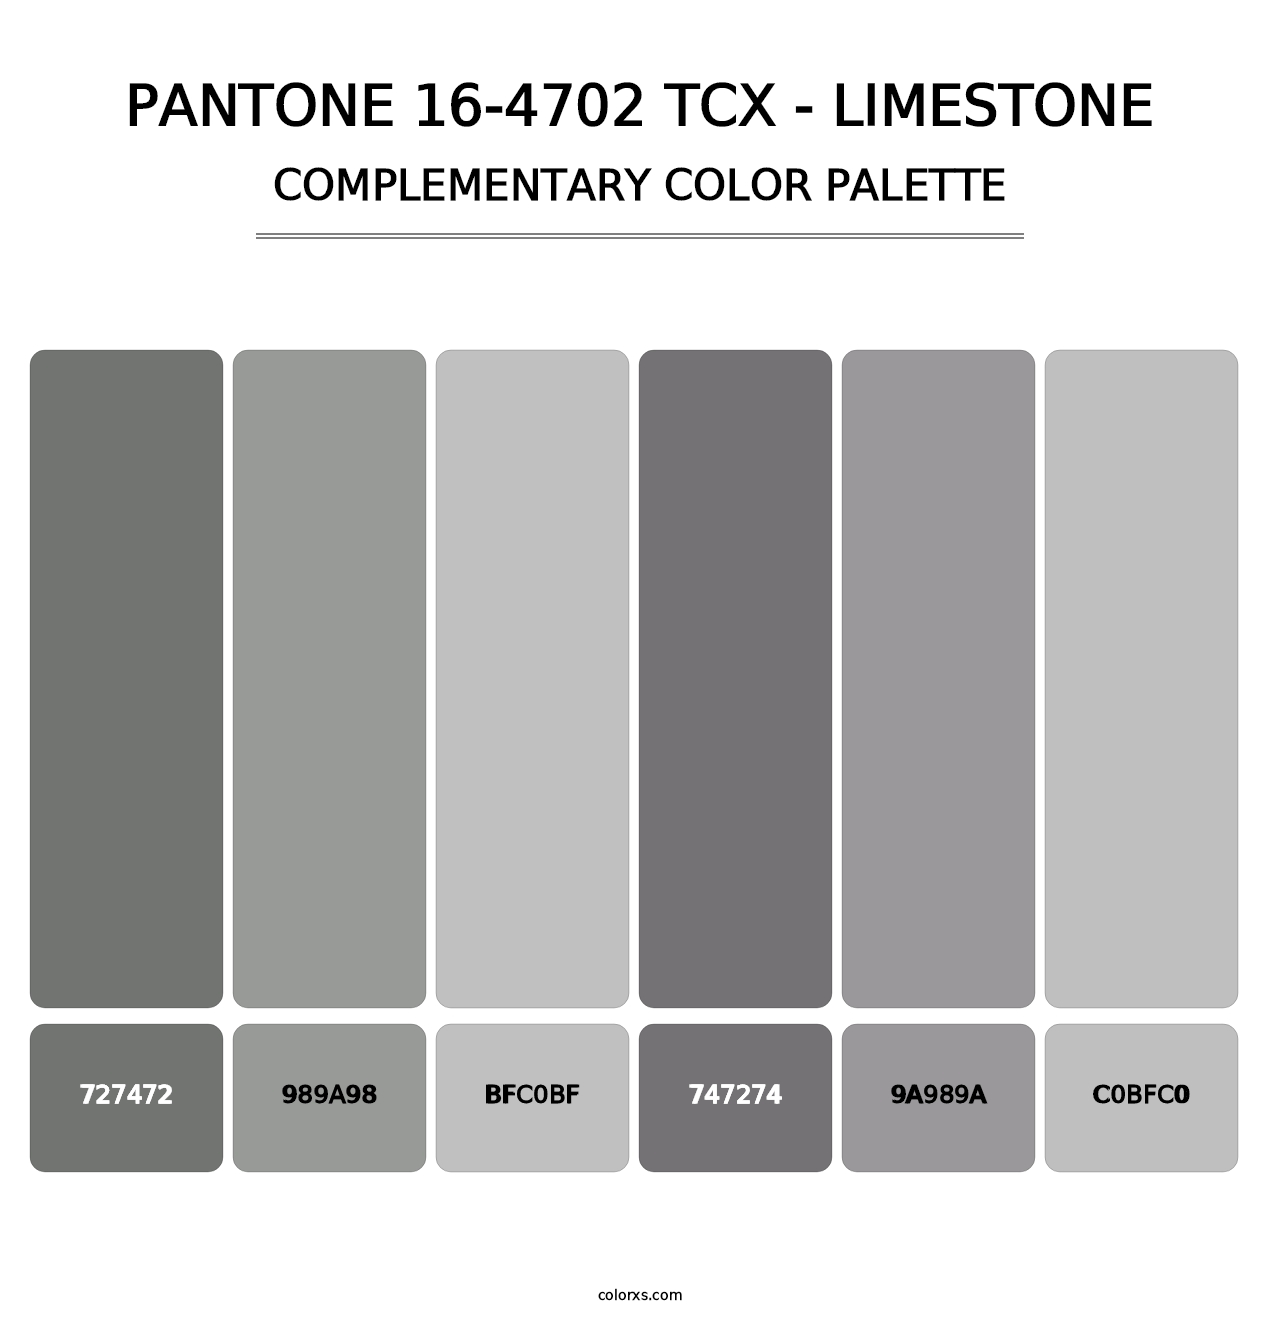 PANTONE 16-4702 TCX - Limestone - Complementary Color Palette